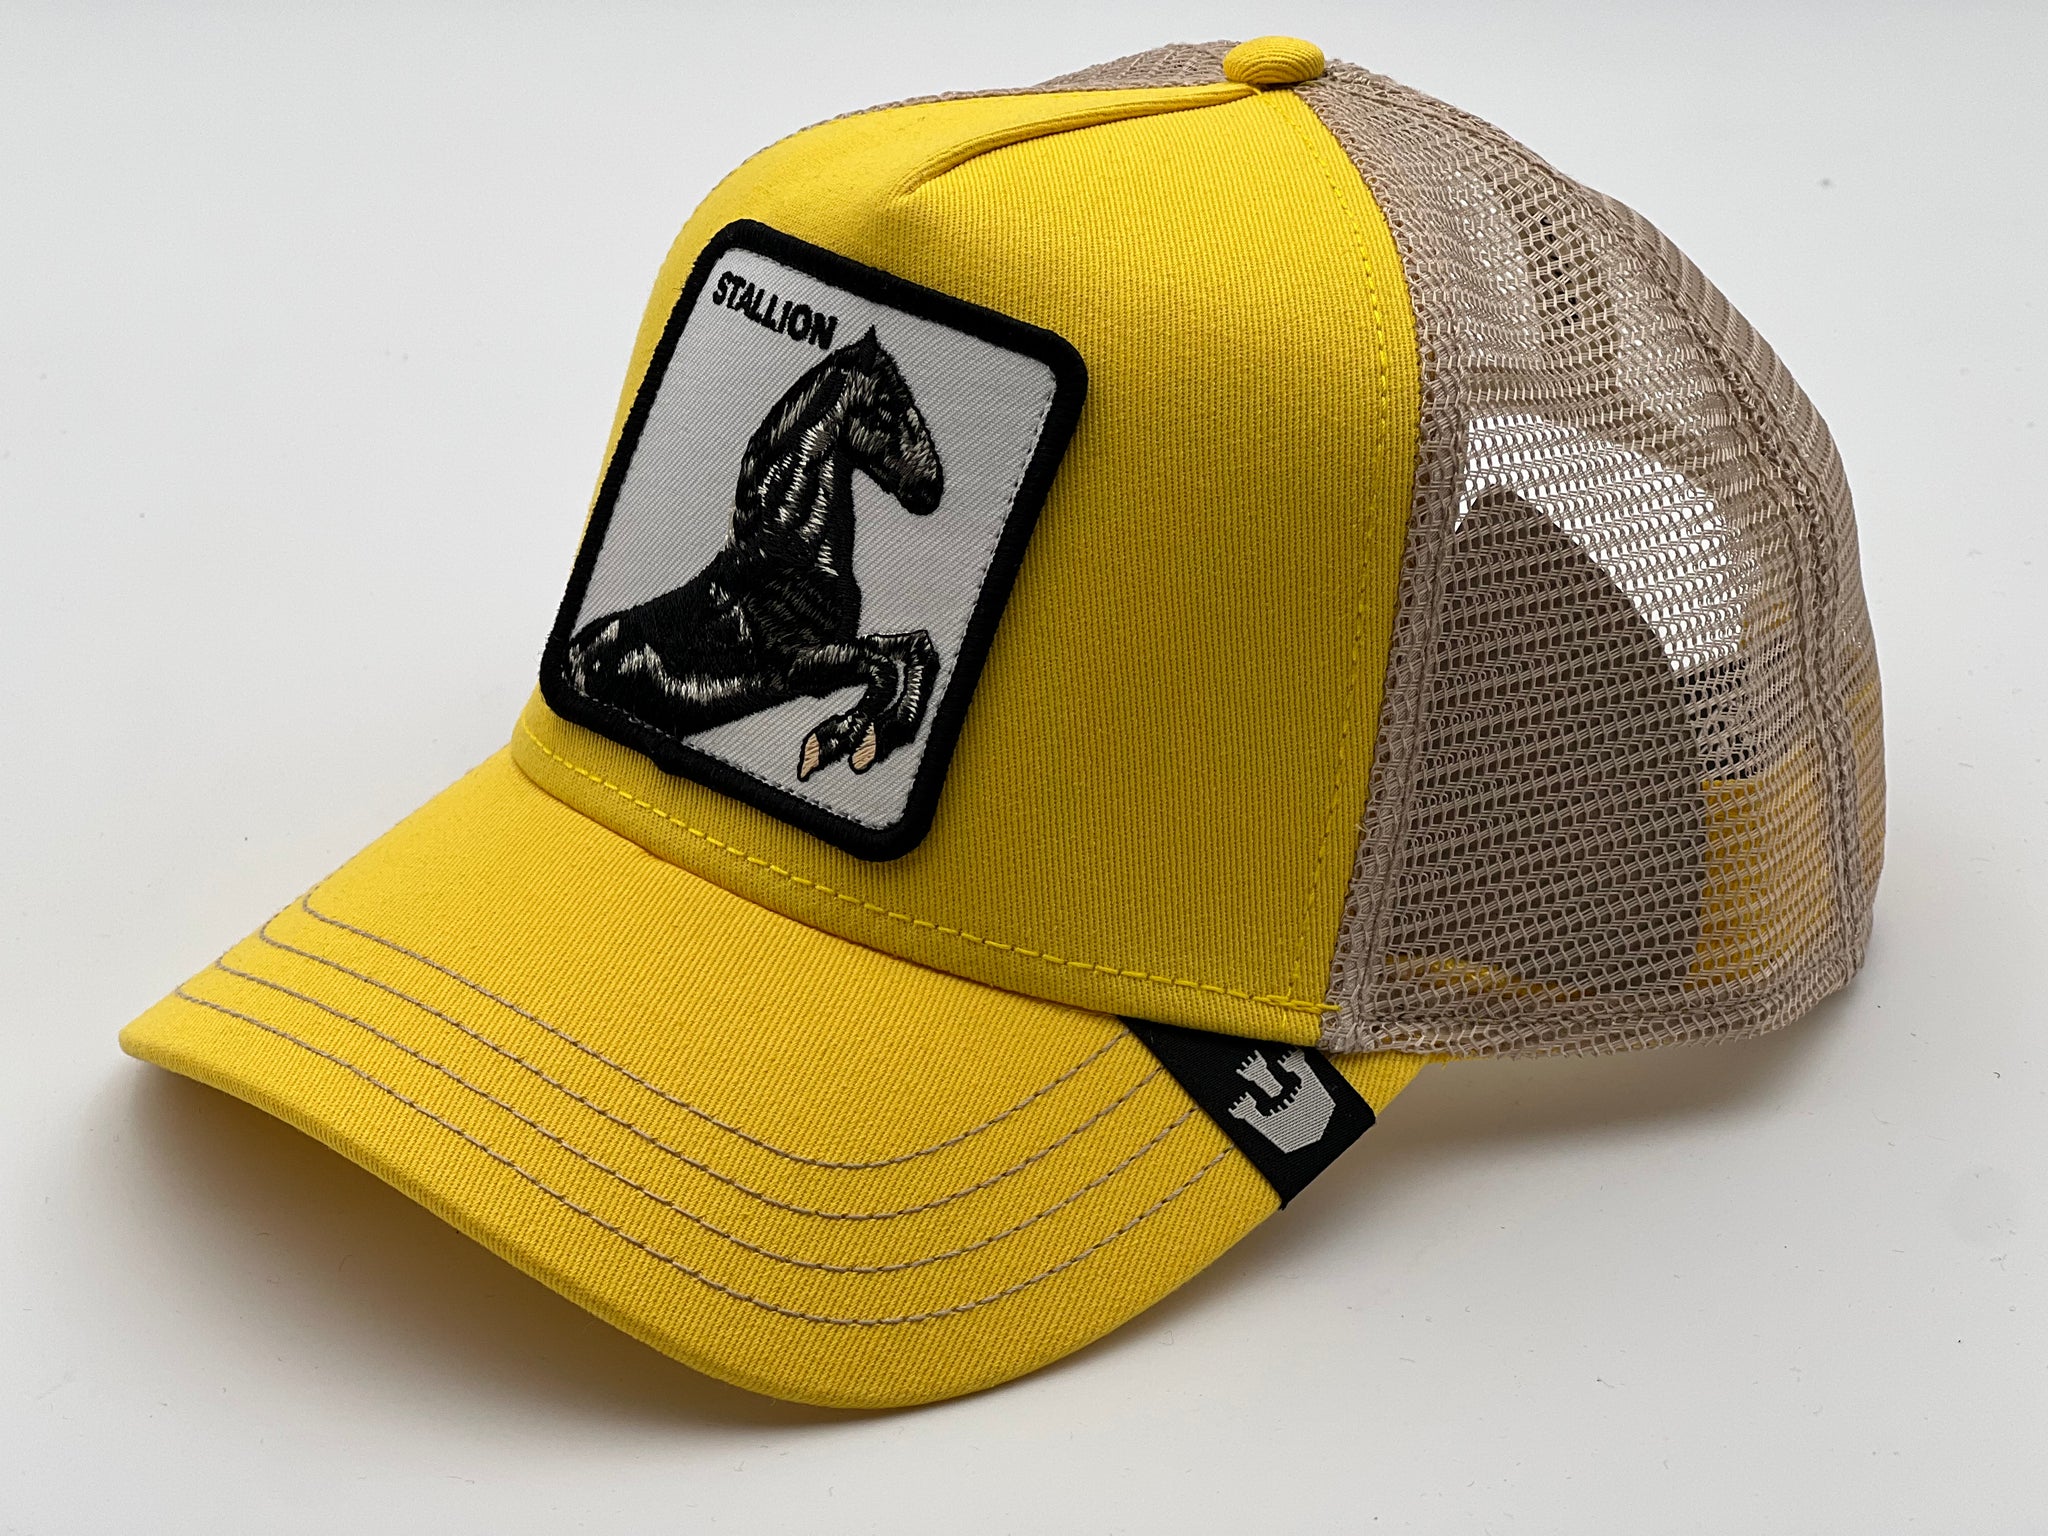 Goorin The Farm trucker cap collection The Stallion Yellow 1010393-YEL One Size